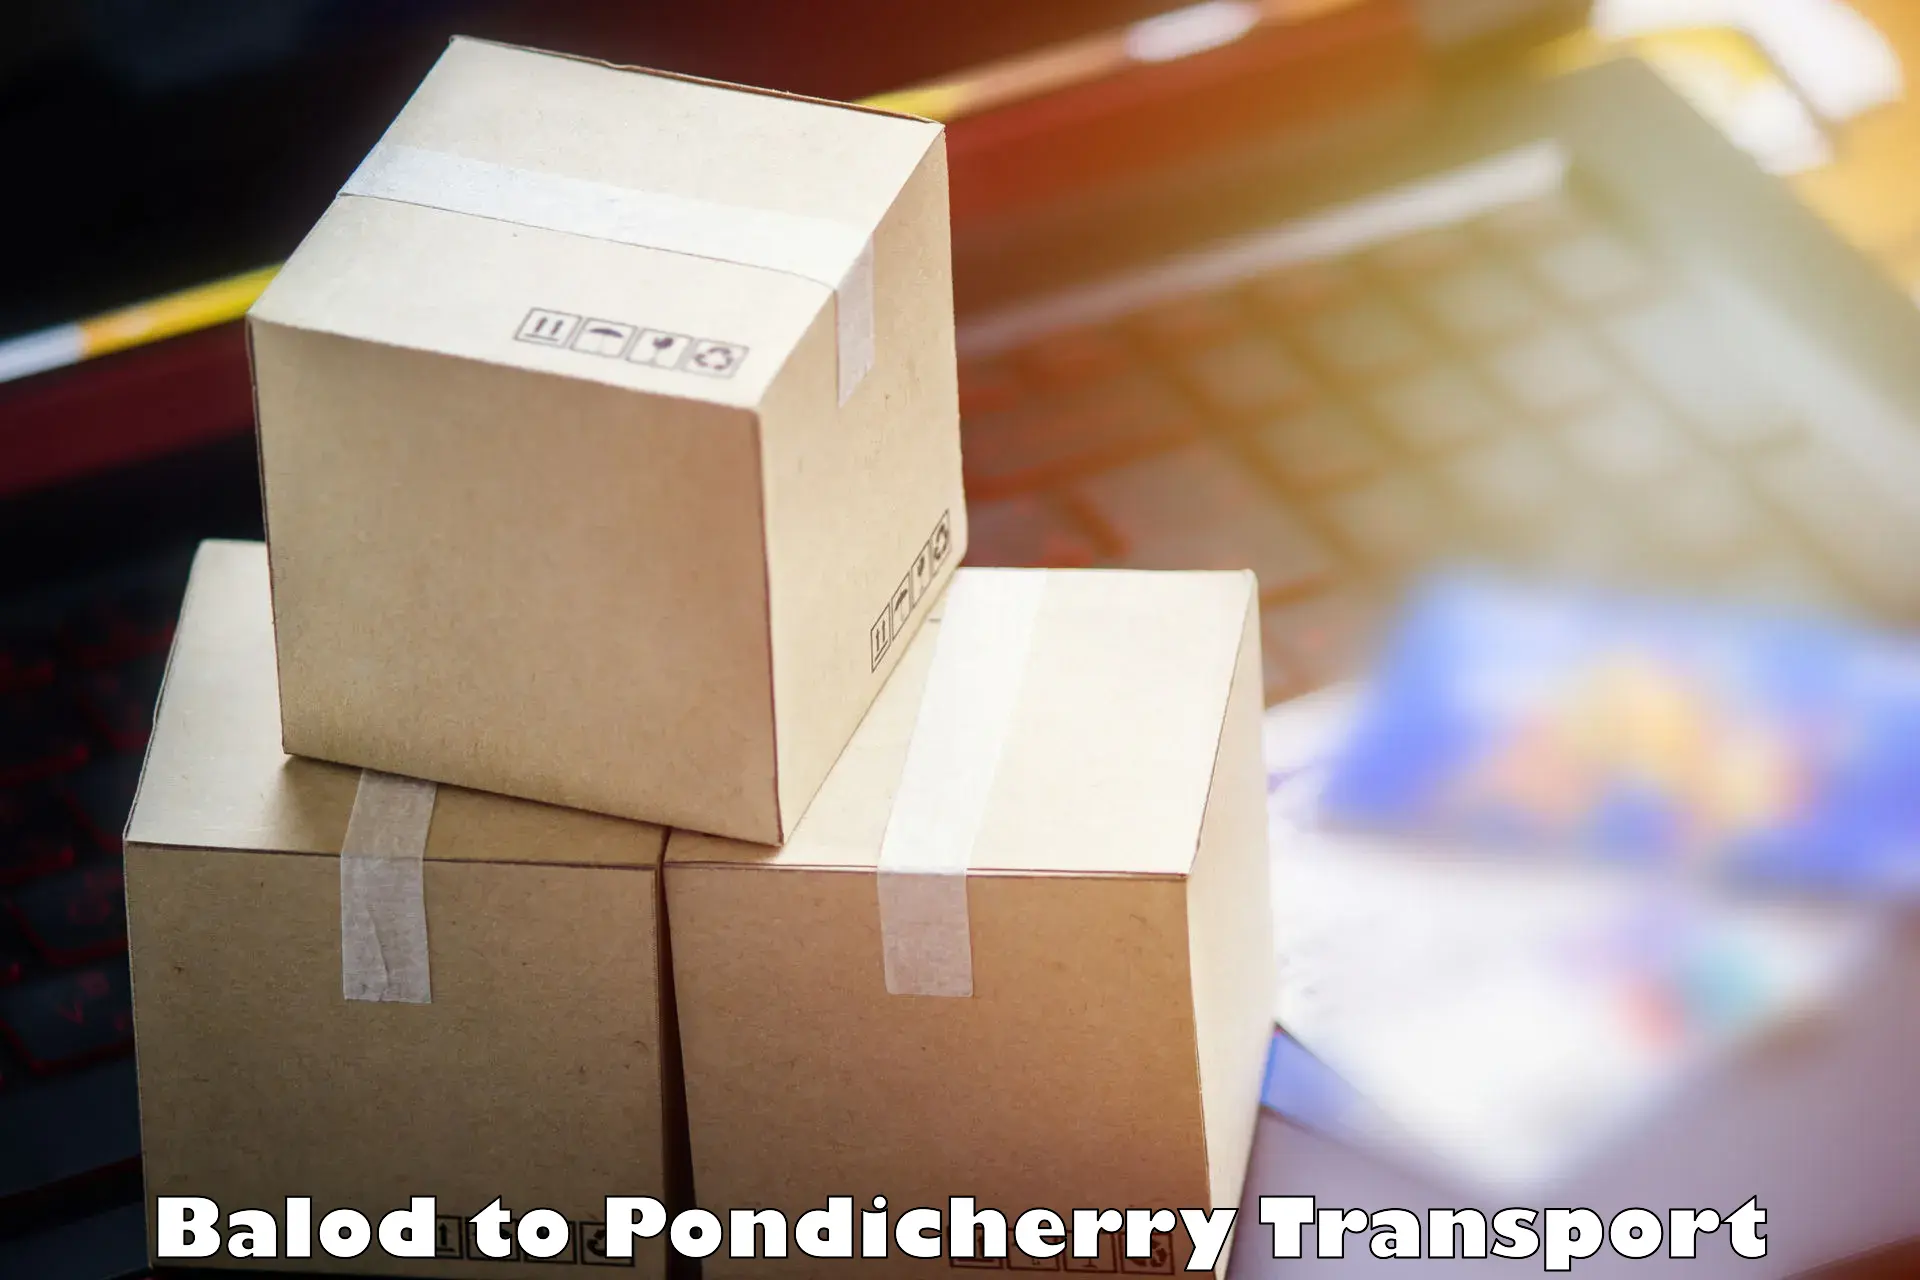 Lorry transport service Balod to Pondicherry